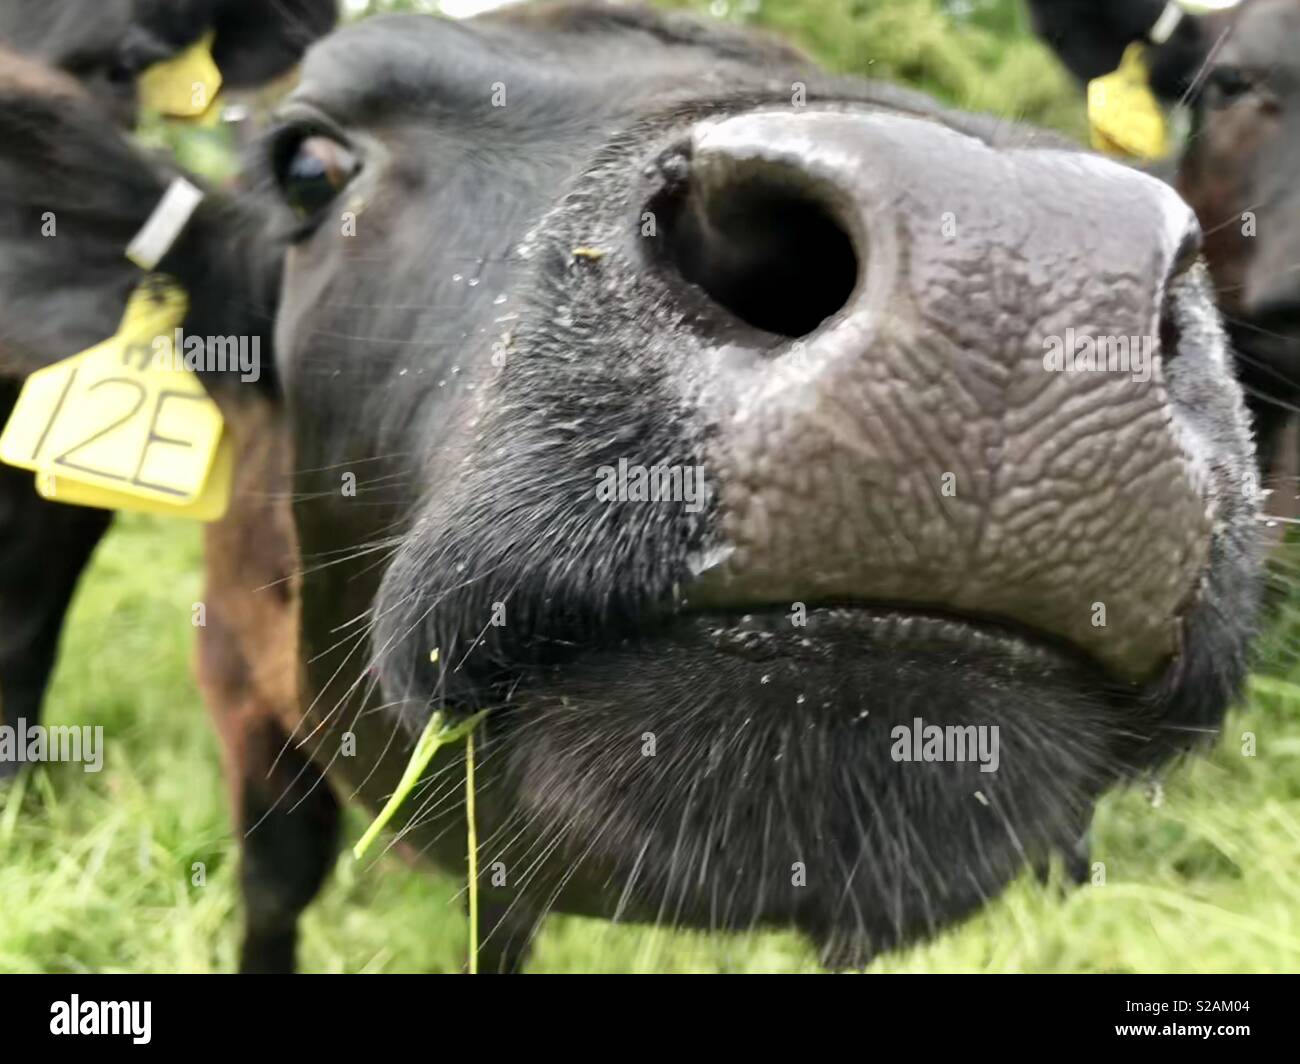 Nosey cow Stock Photo